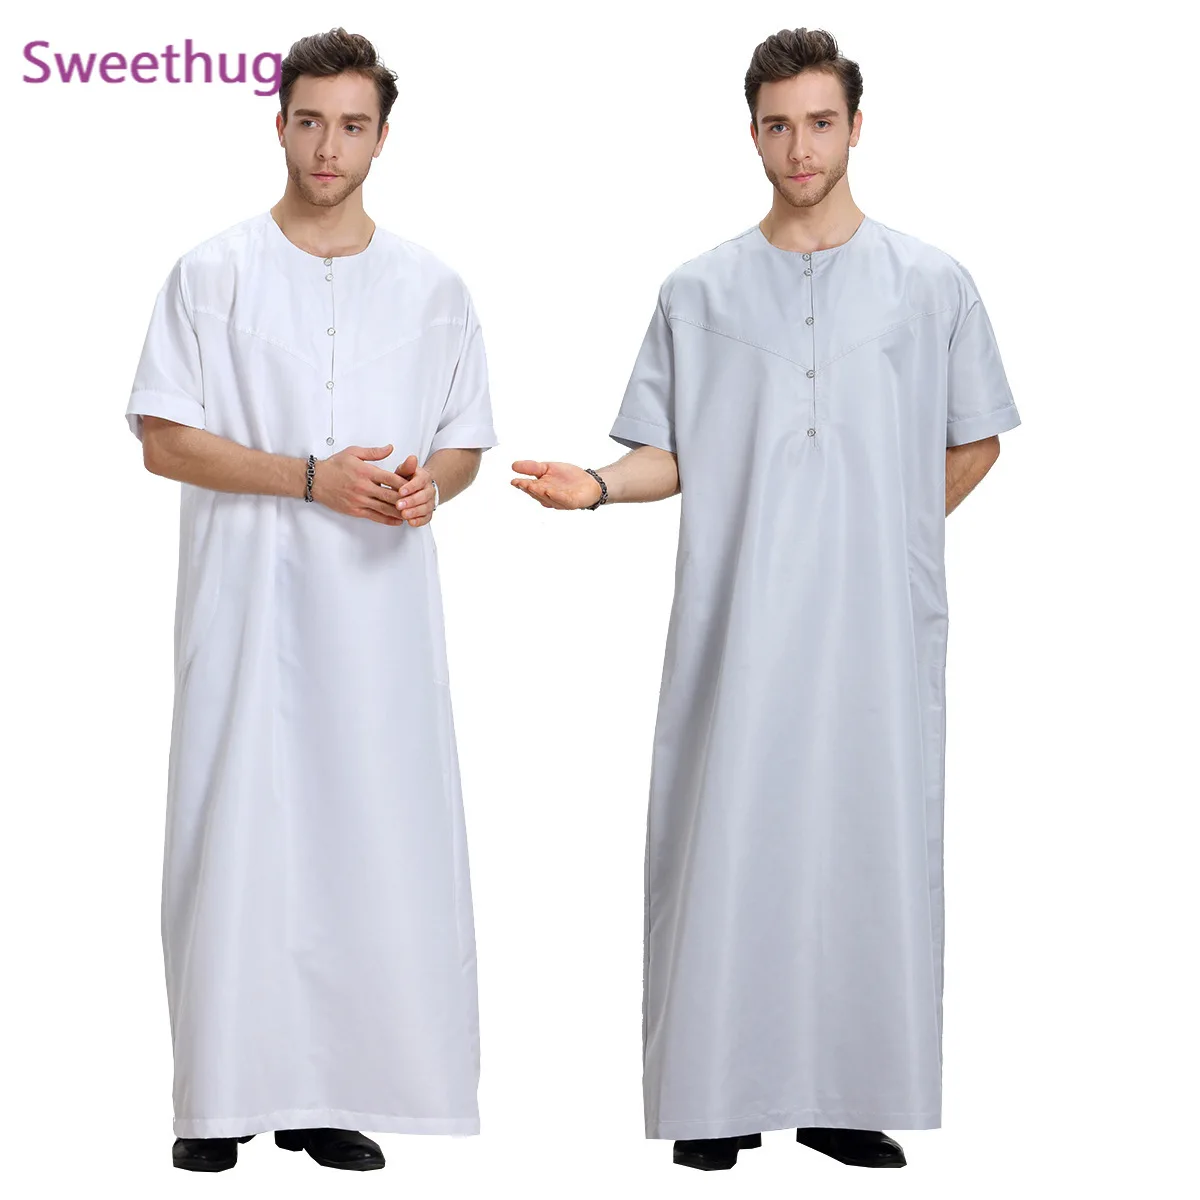 2021 Caftan Marocain Muslim Men Abaya Saudi Arabia Short Sleeve Islamic Clothing Kleding Mannen Qamis Homme Robe Muslim